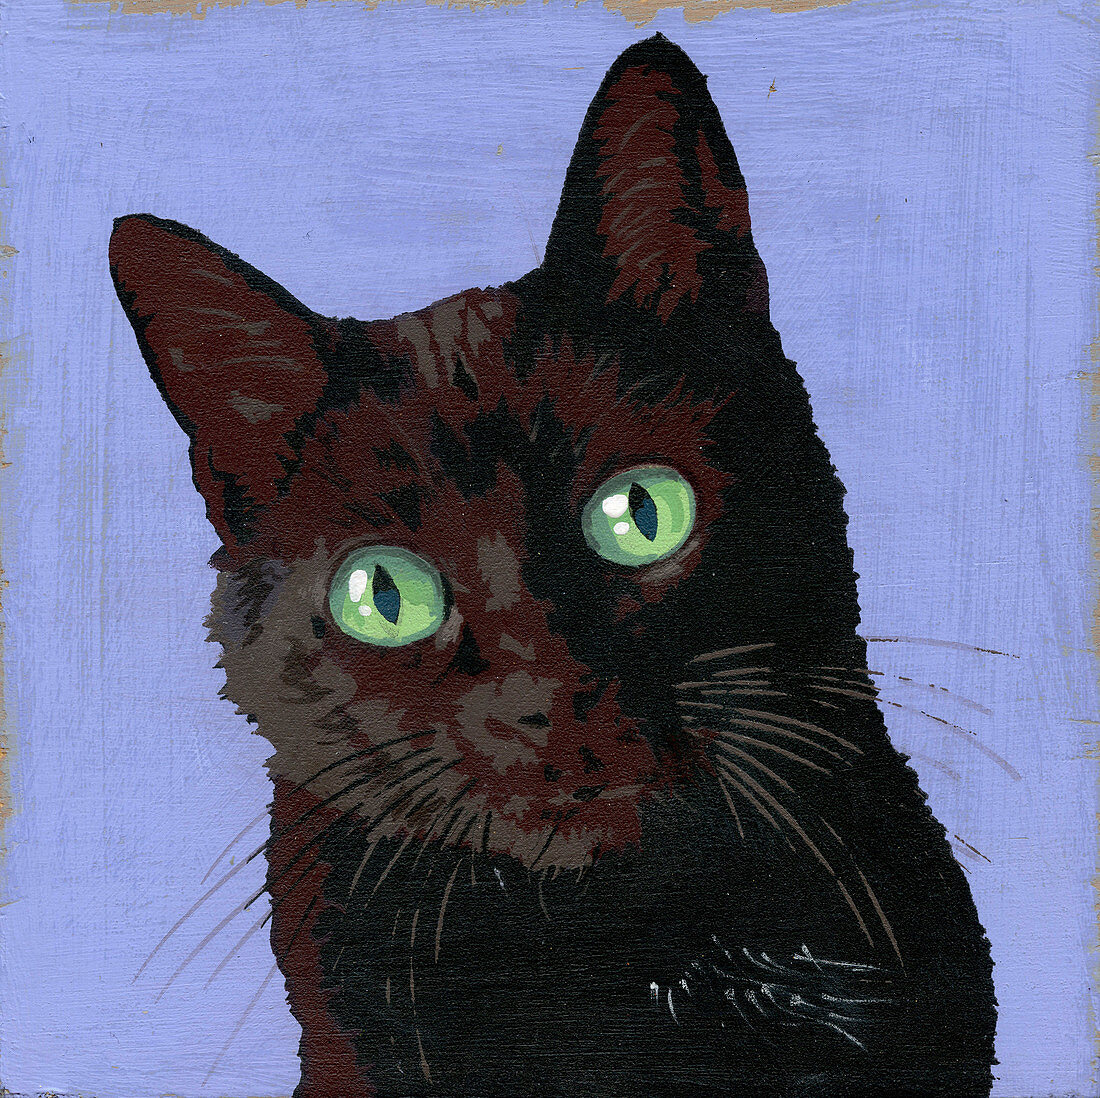 Black cat, illustration